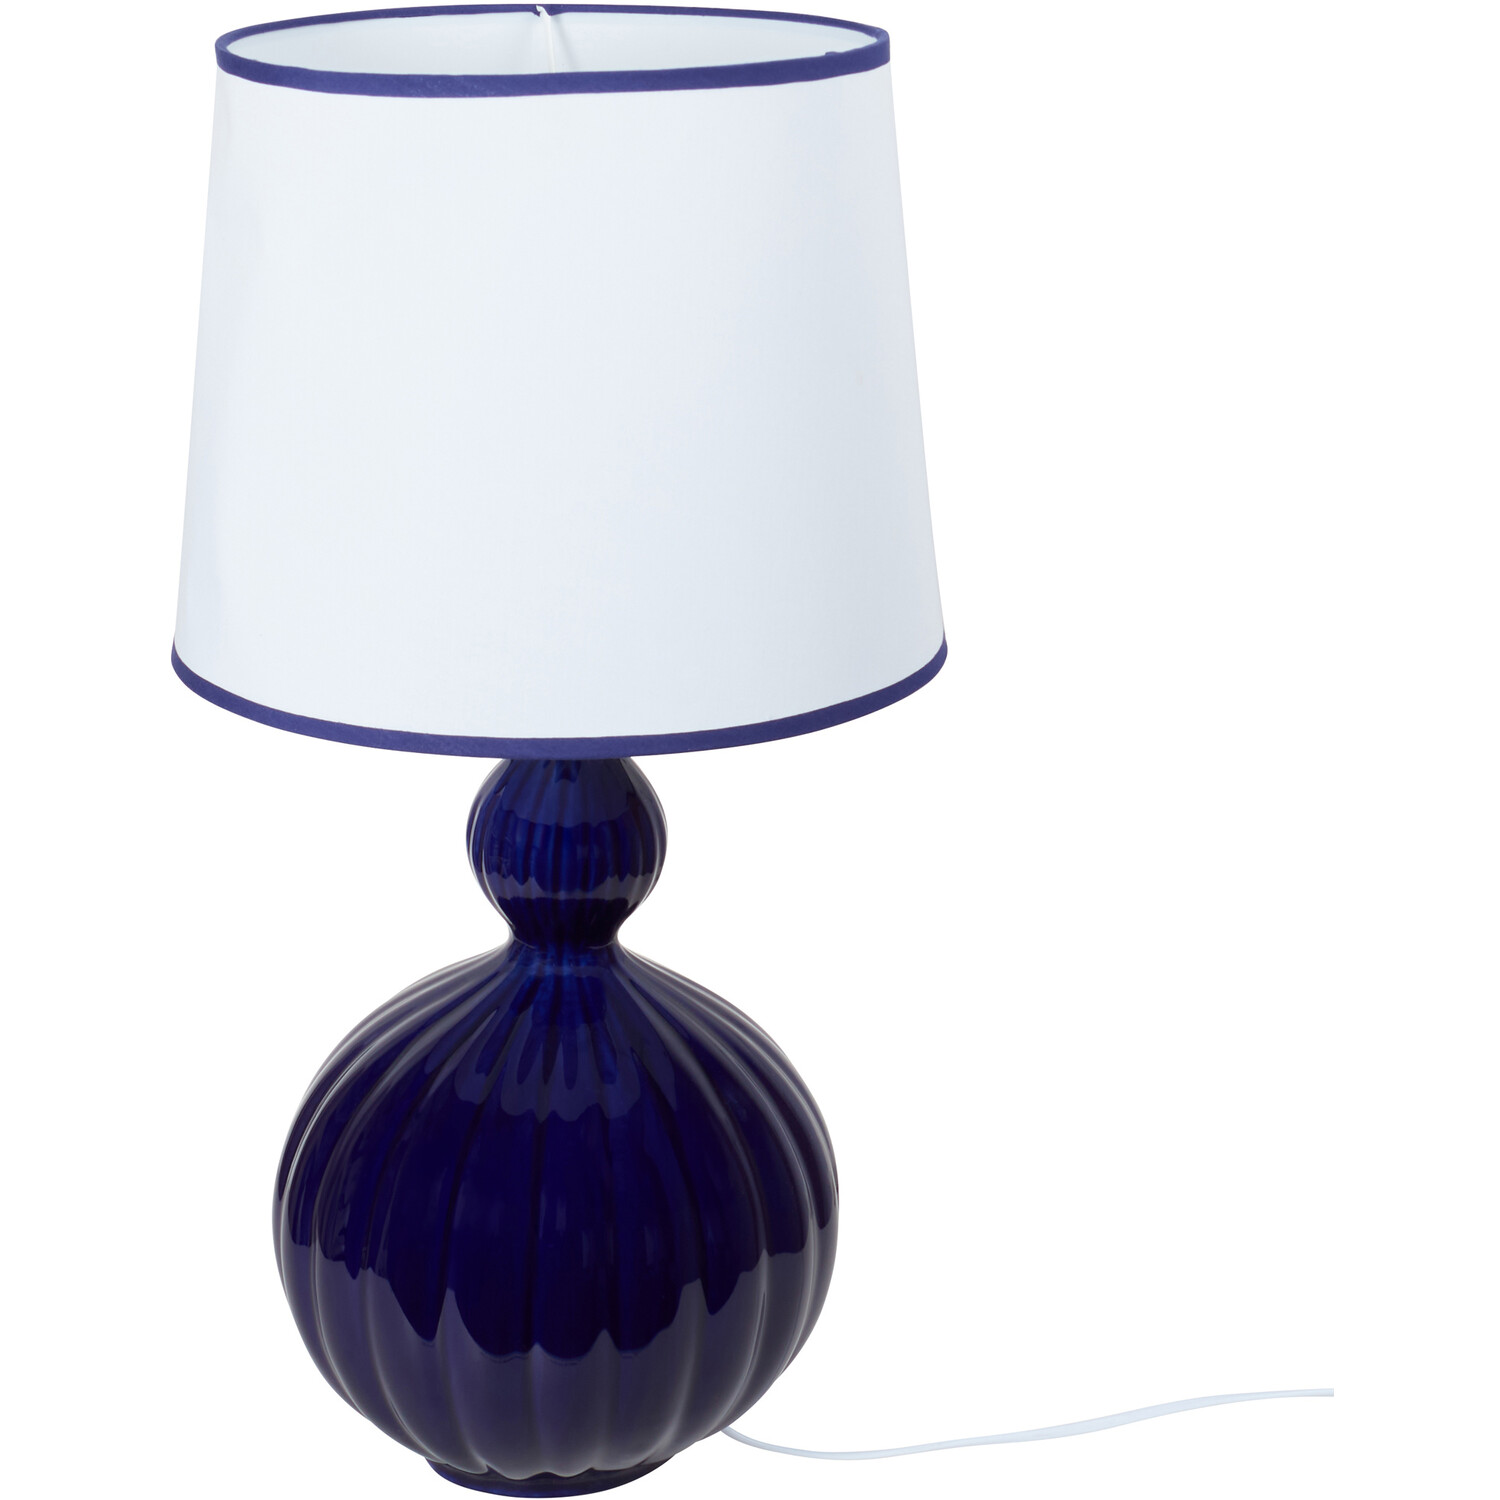 Vida Table Lamp - Blue Image 1